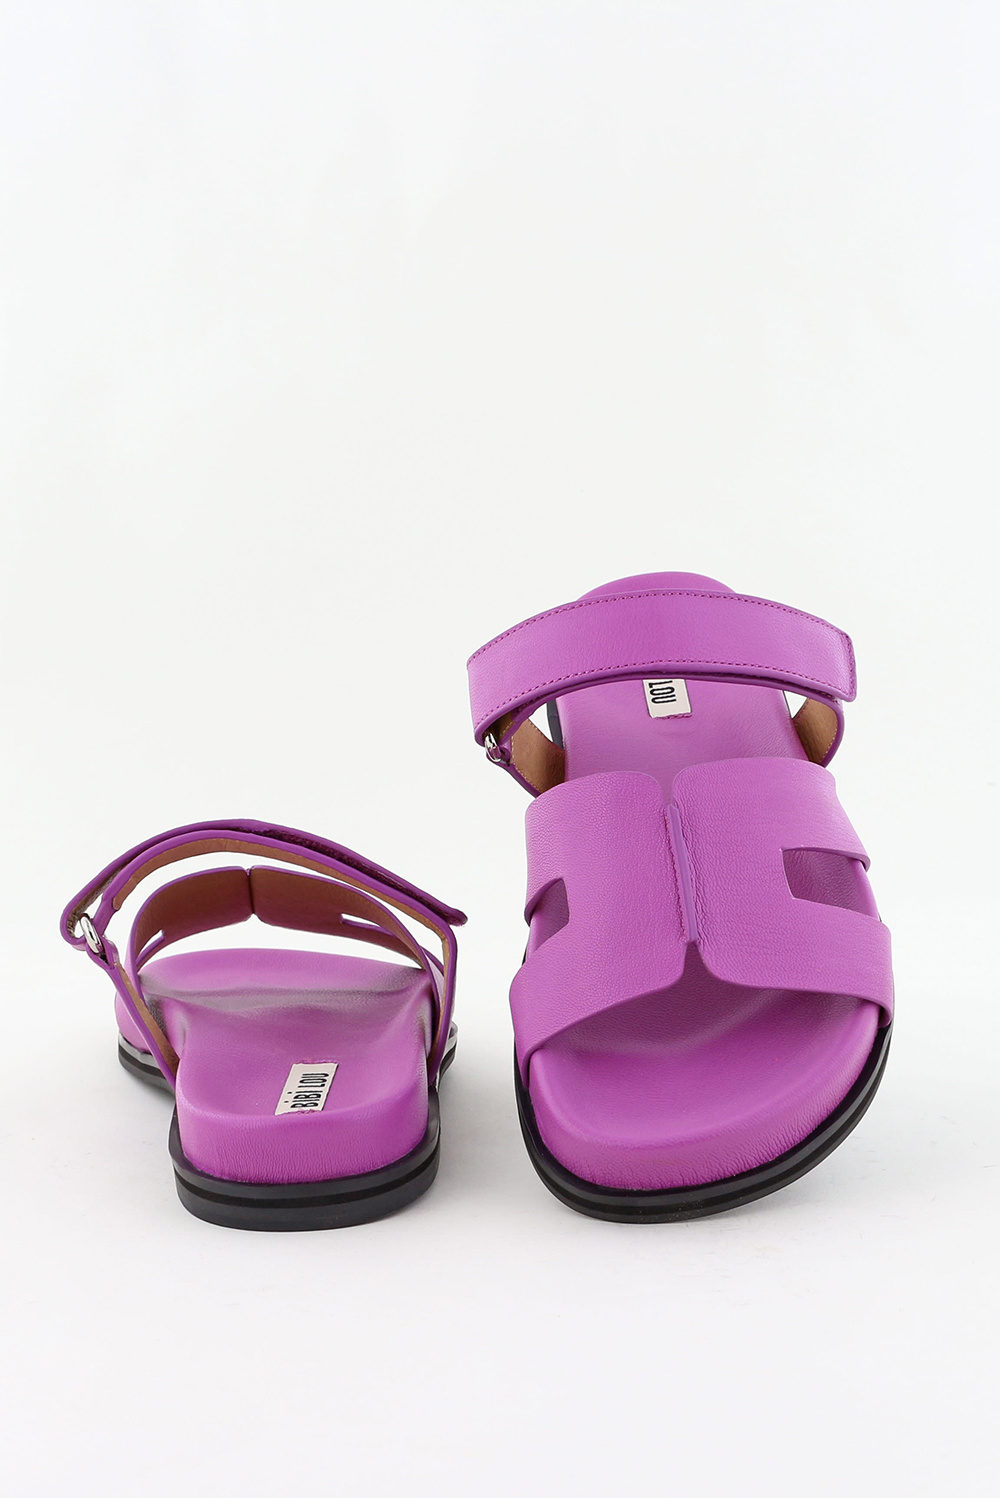 dosis Deter Woord Bibi Lou sandalen 525Z40VK roze - Marjon Snieders